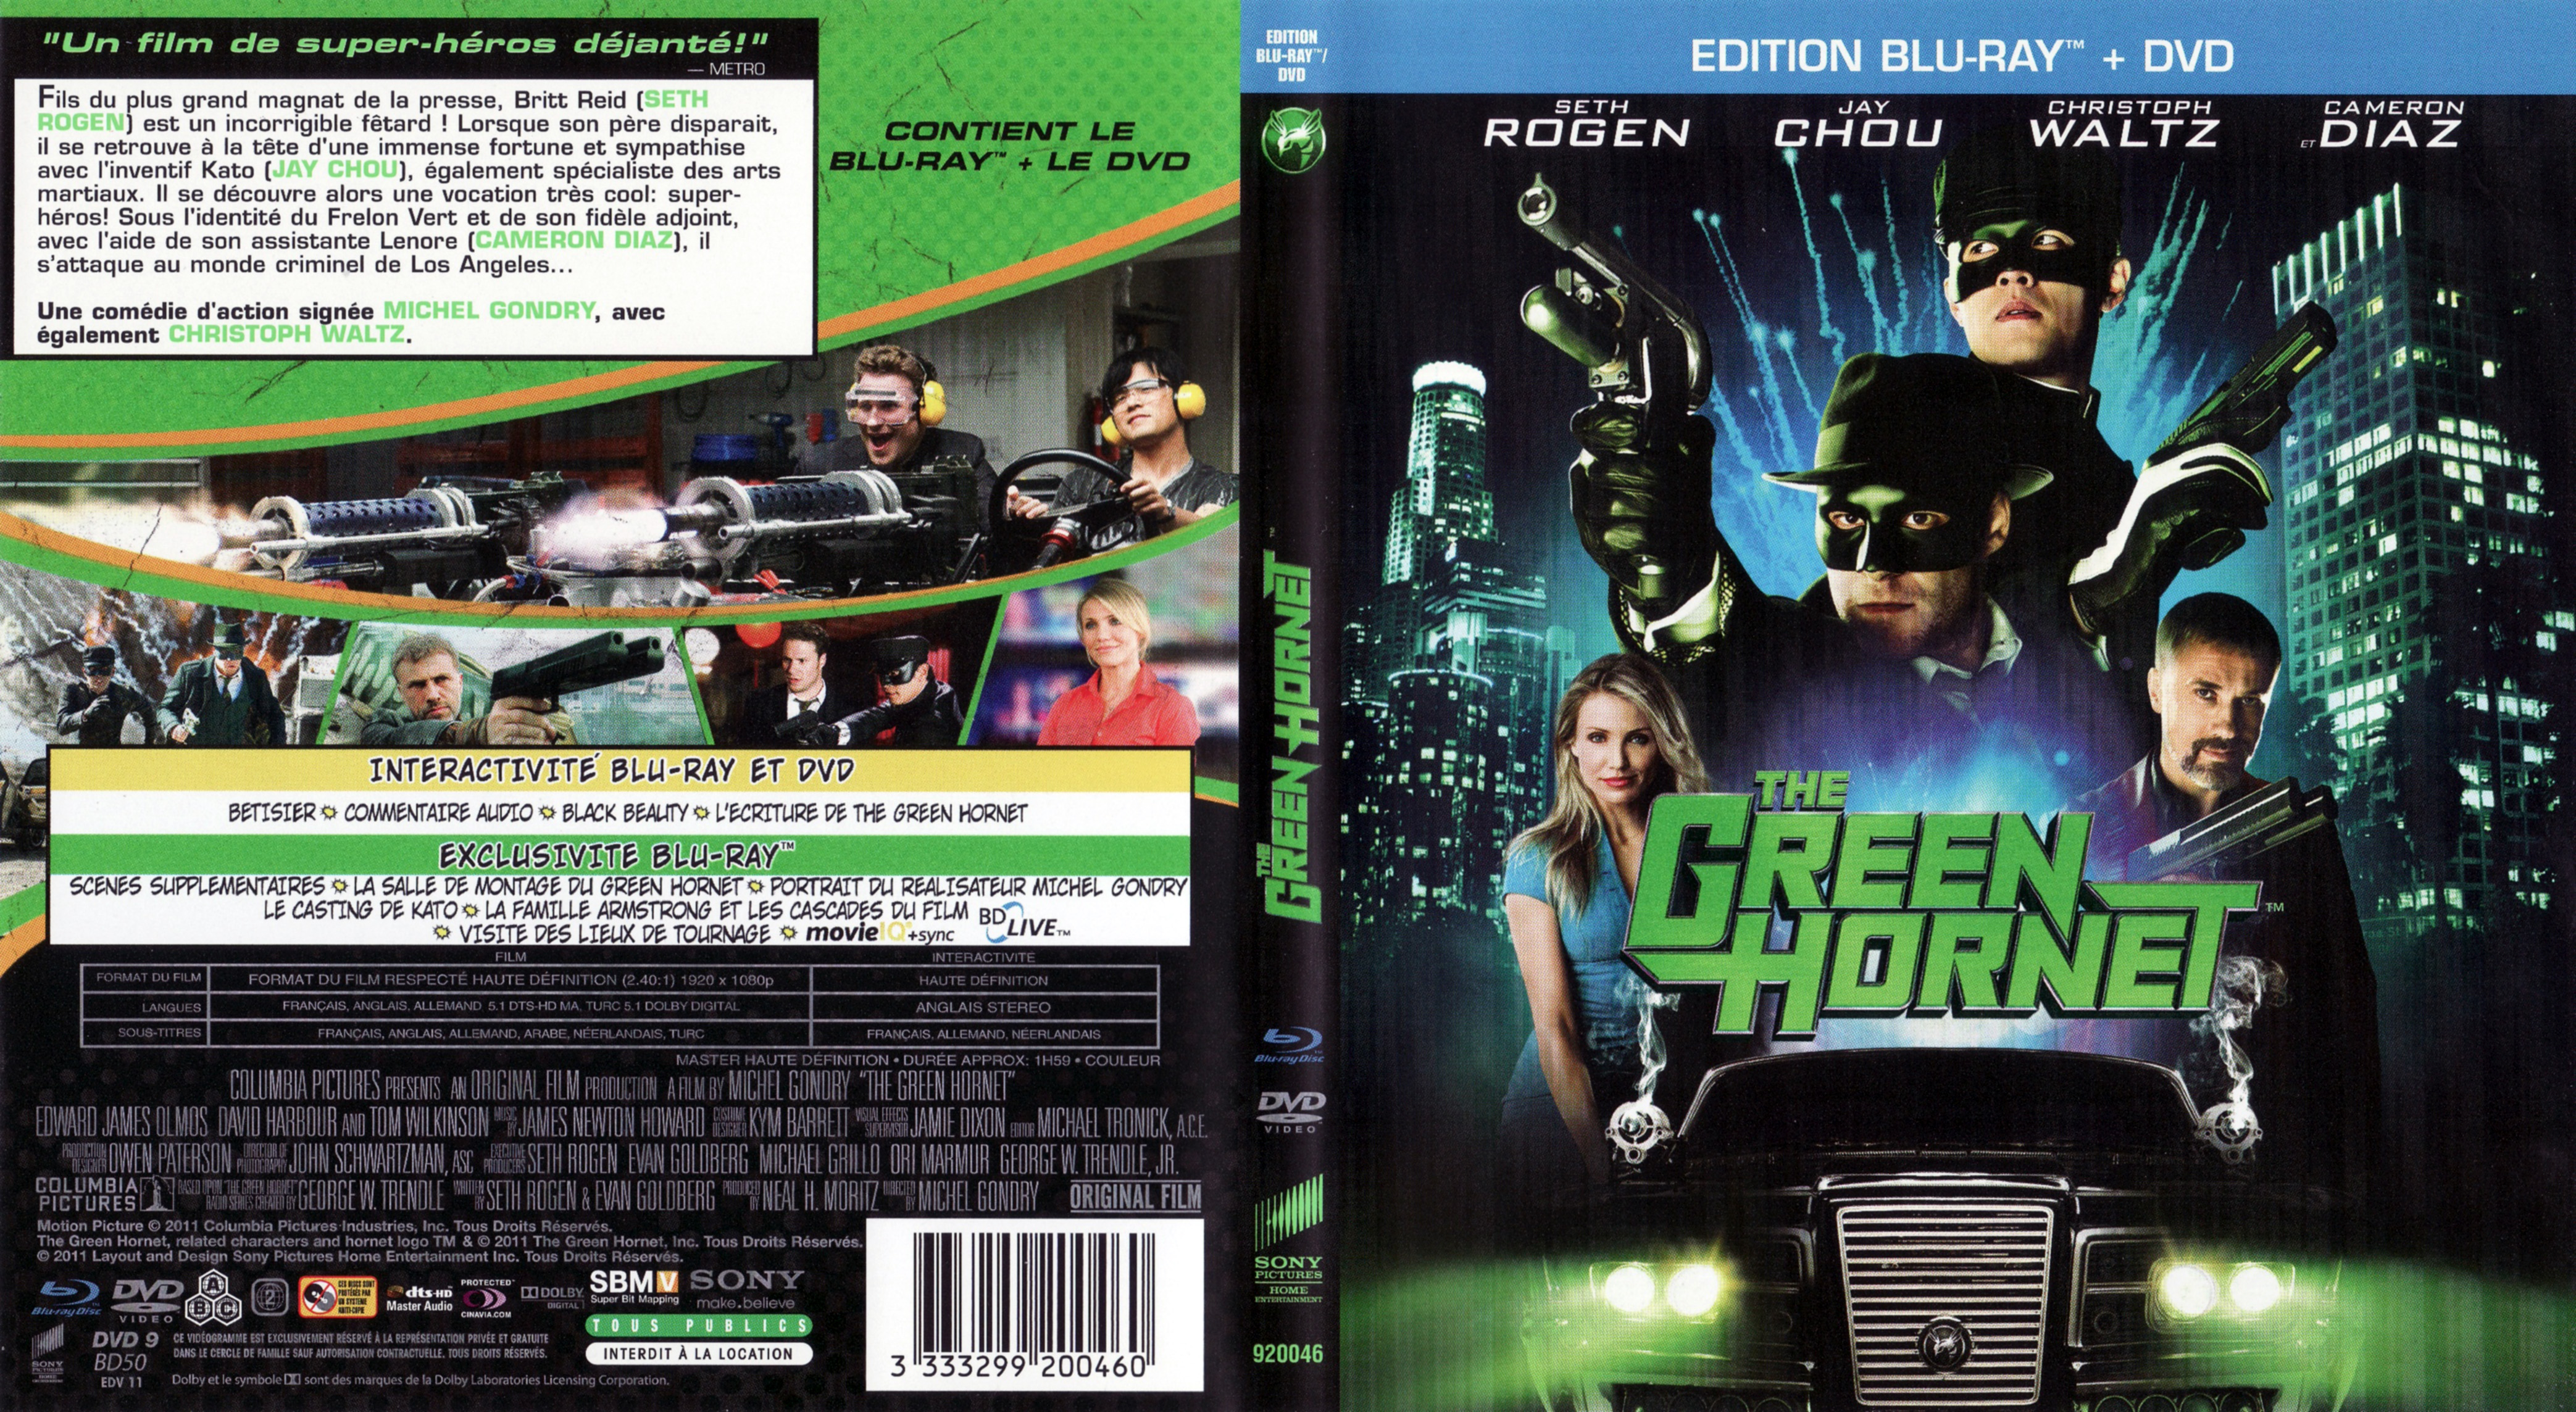 Jaquette DVD The green hornet (BLU-RAY) v2